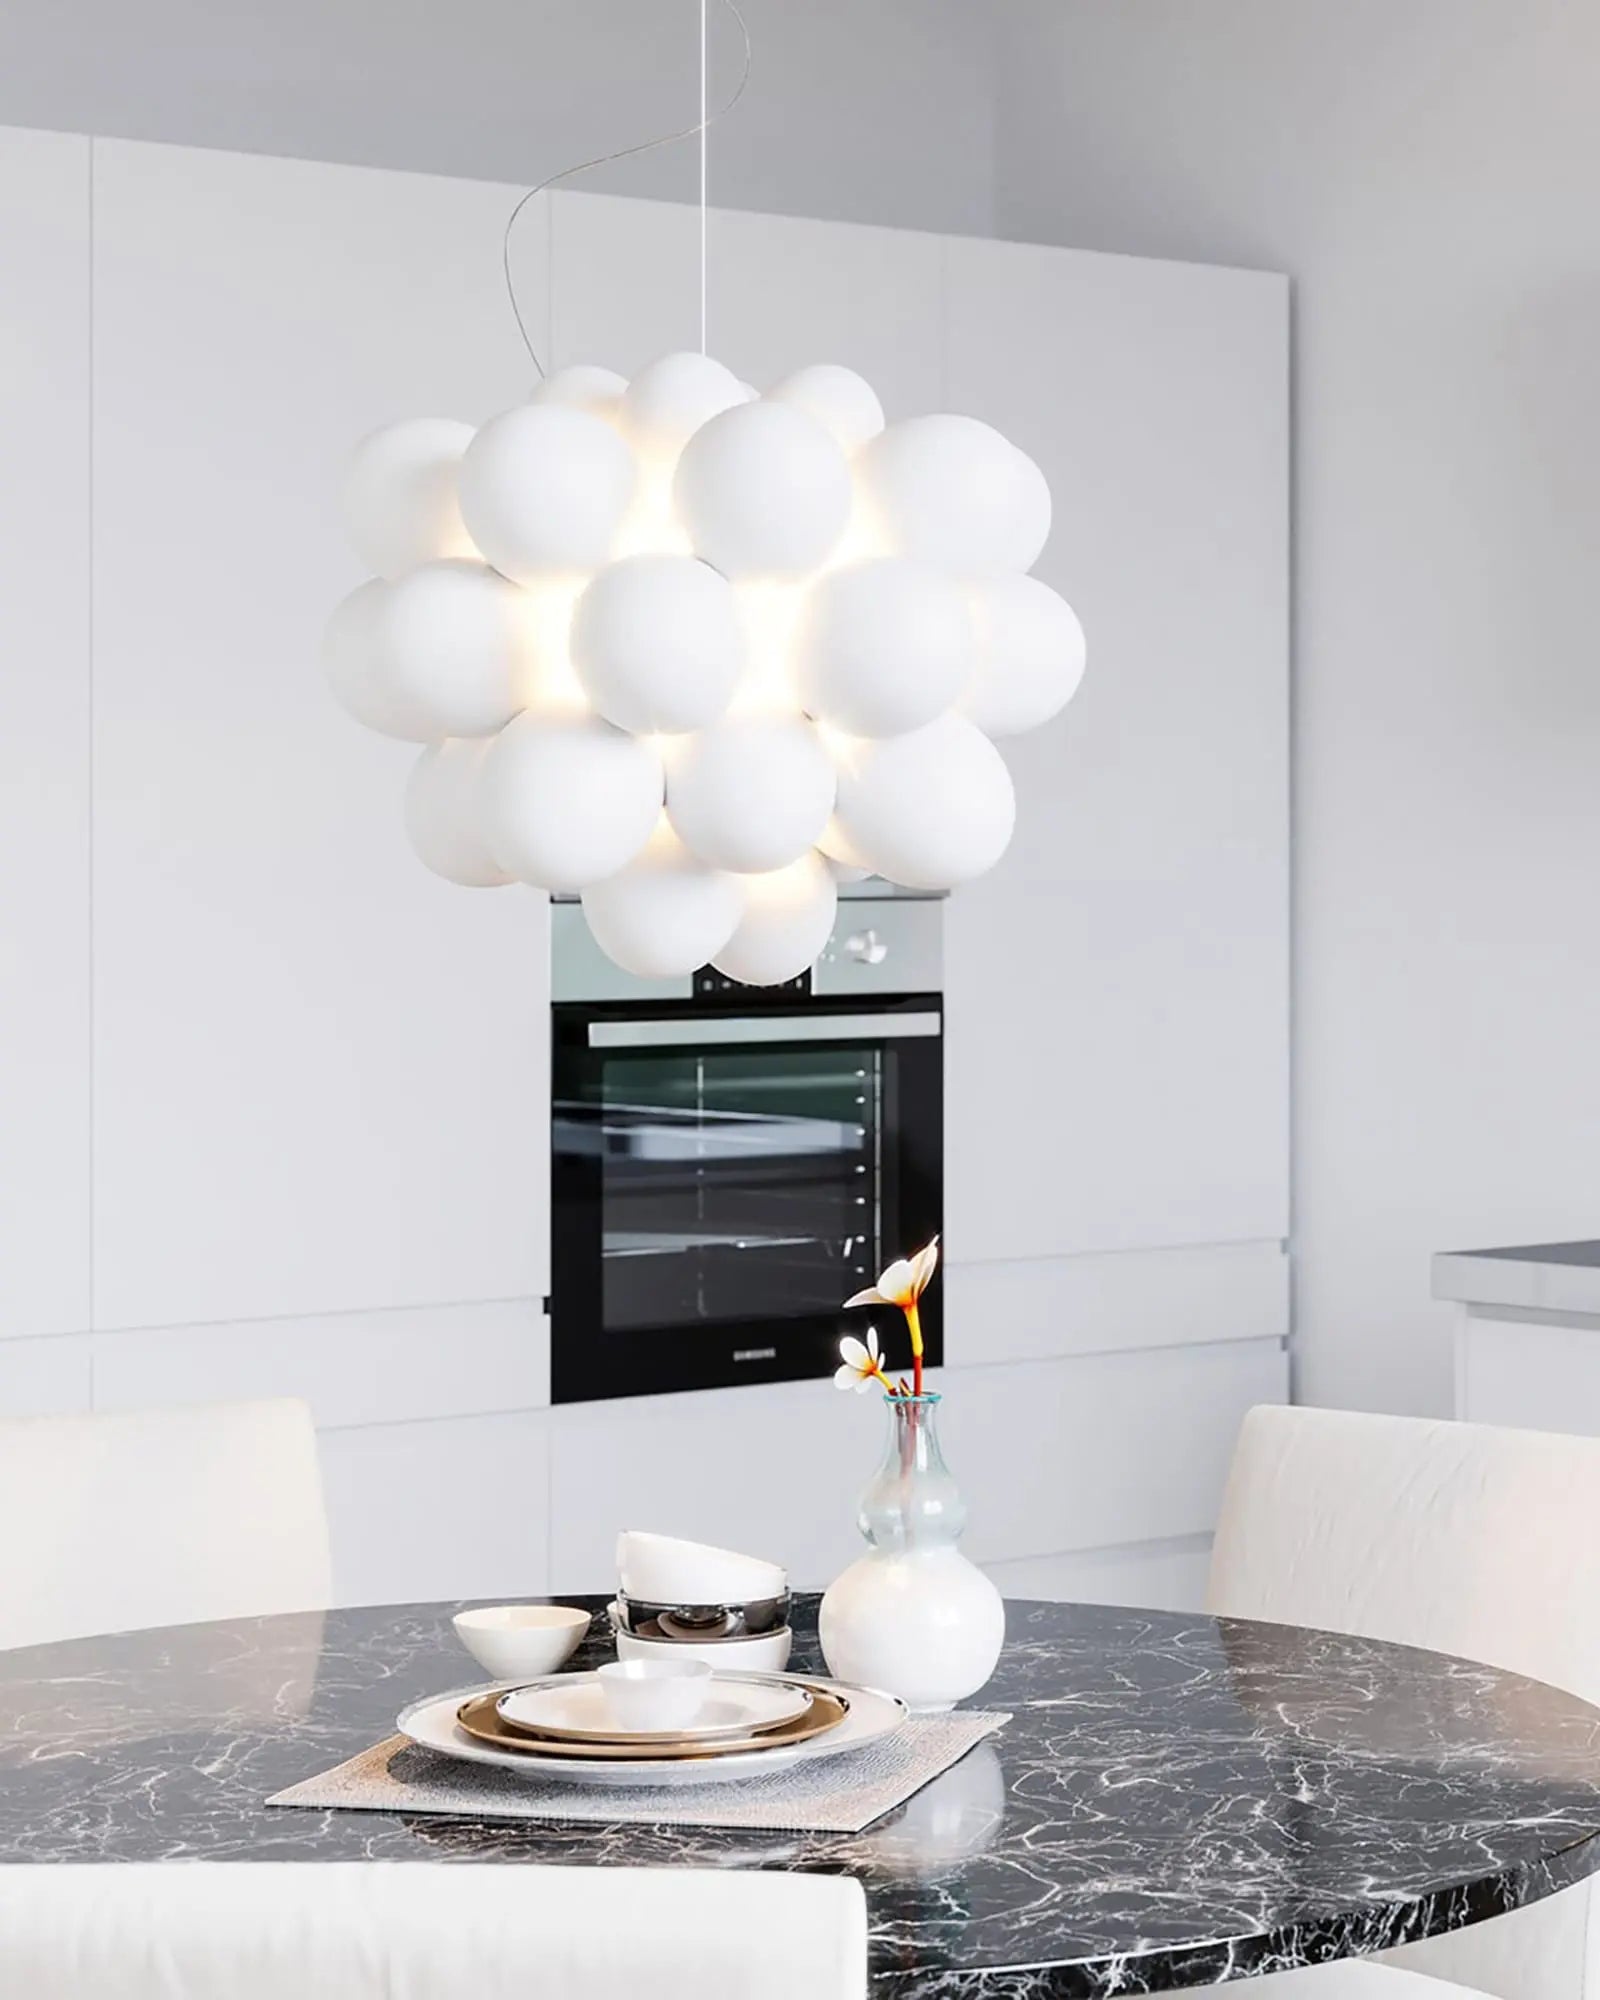 Gross blown glass pendant light above a dining table